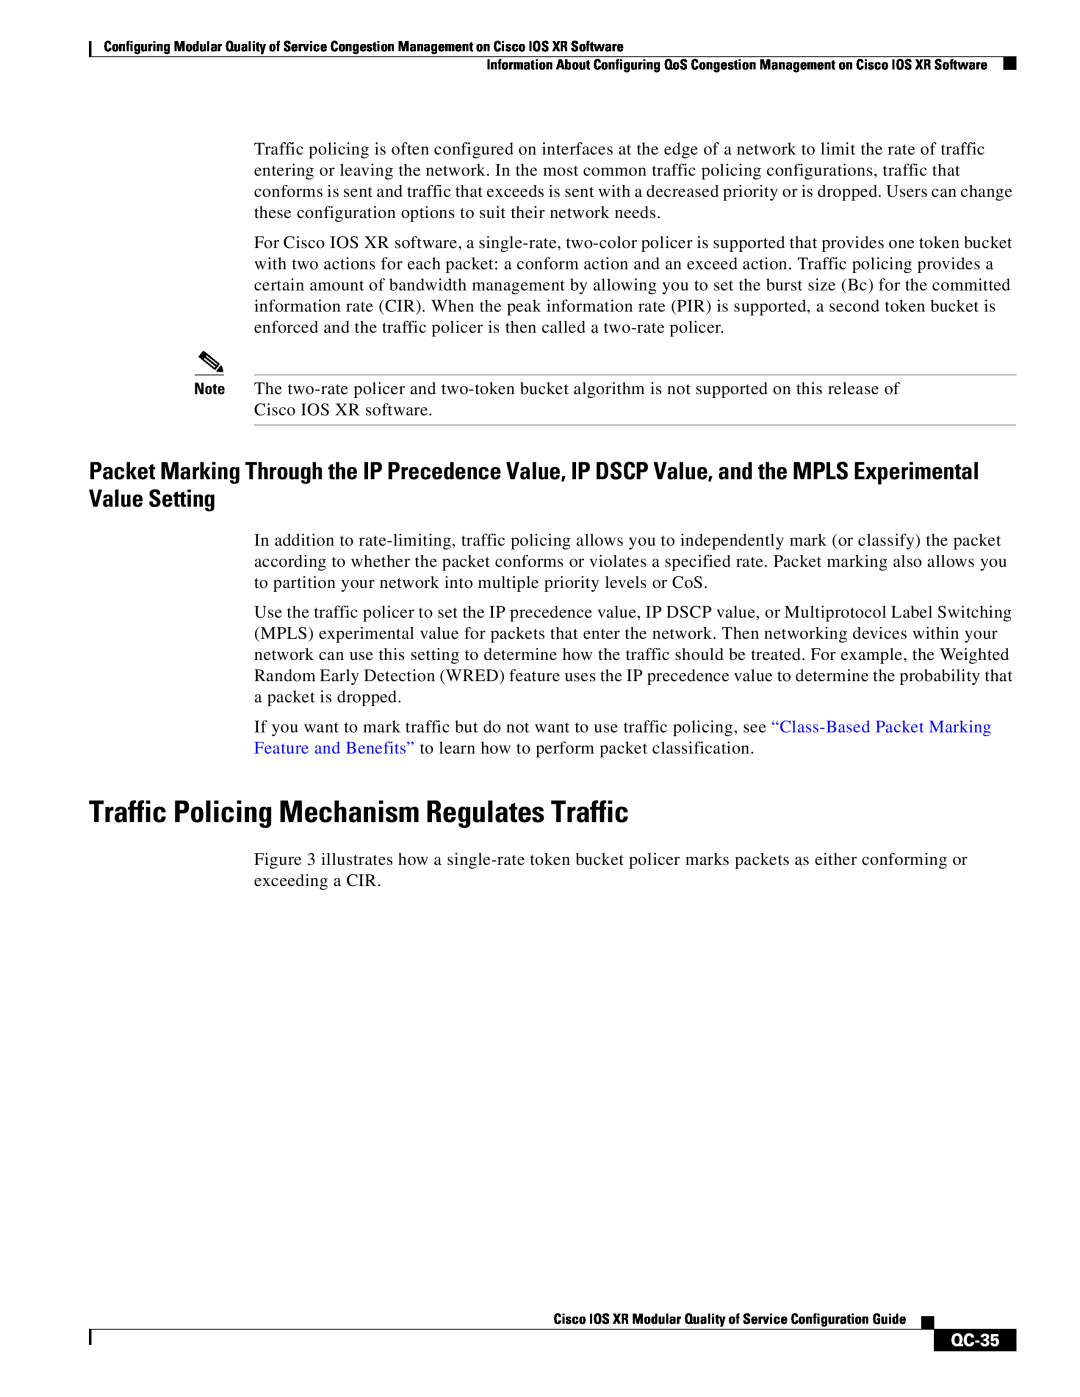 Cisco Systems QC-29 manual Traffic Policing Mechanism Regulates Traffic, QC-35 